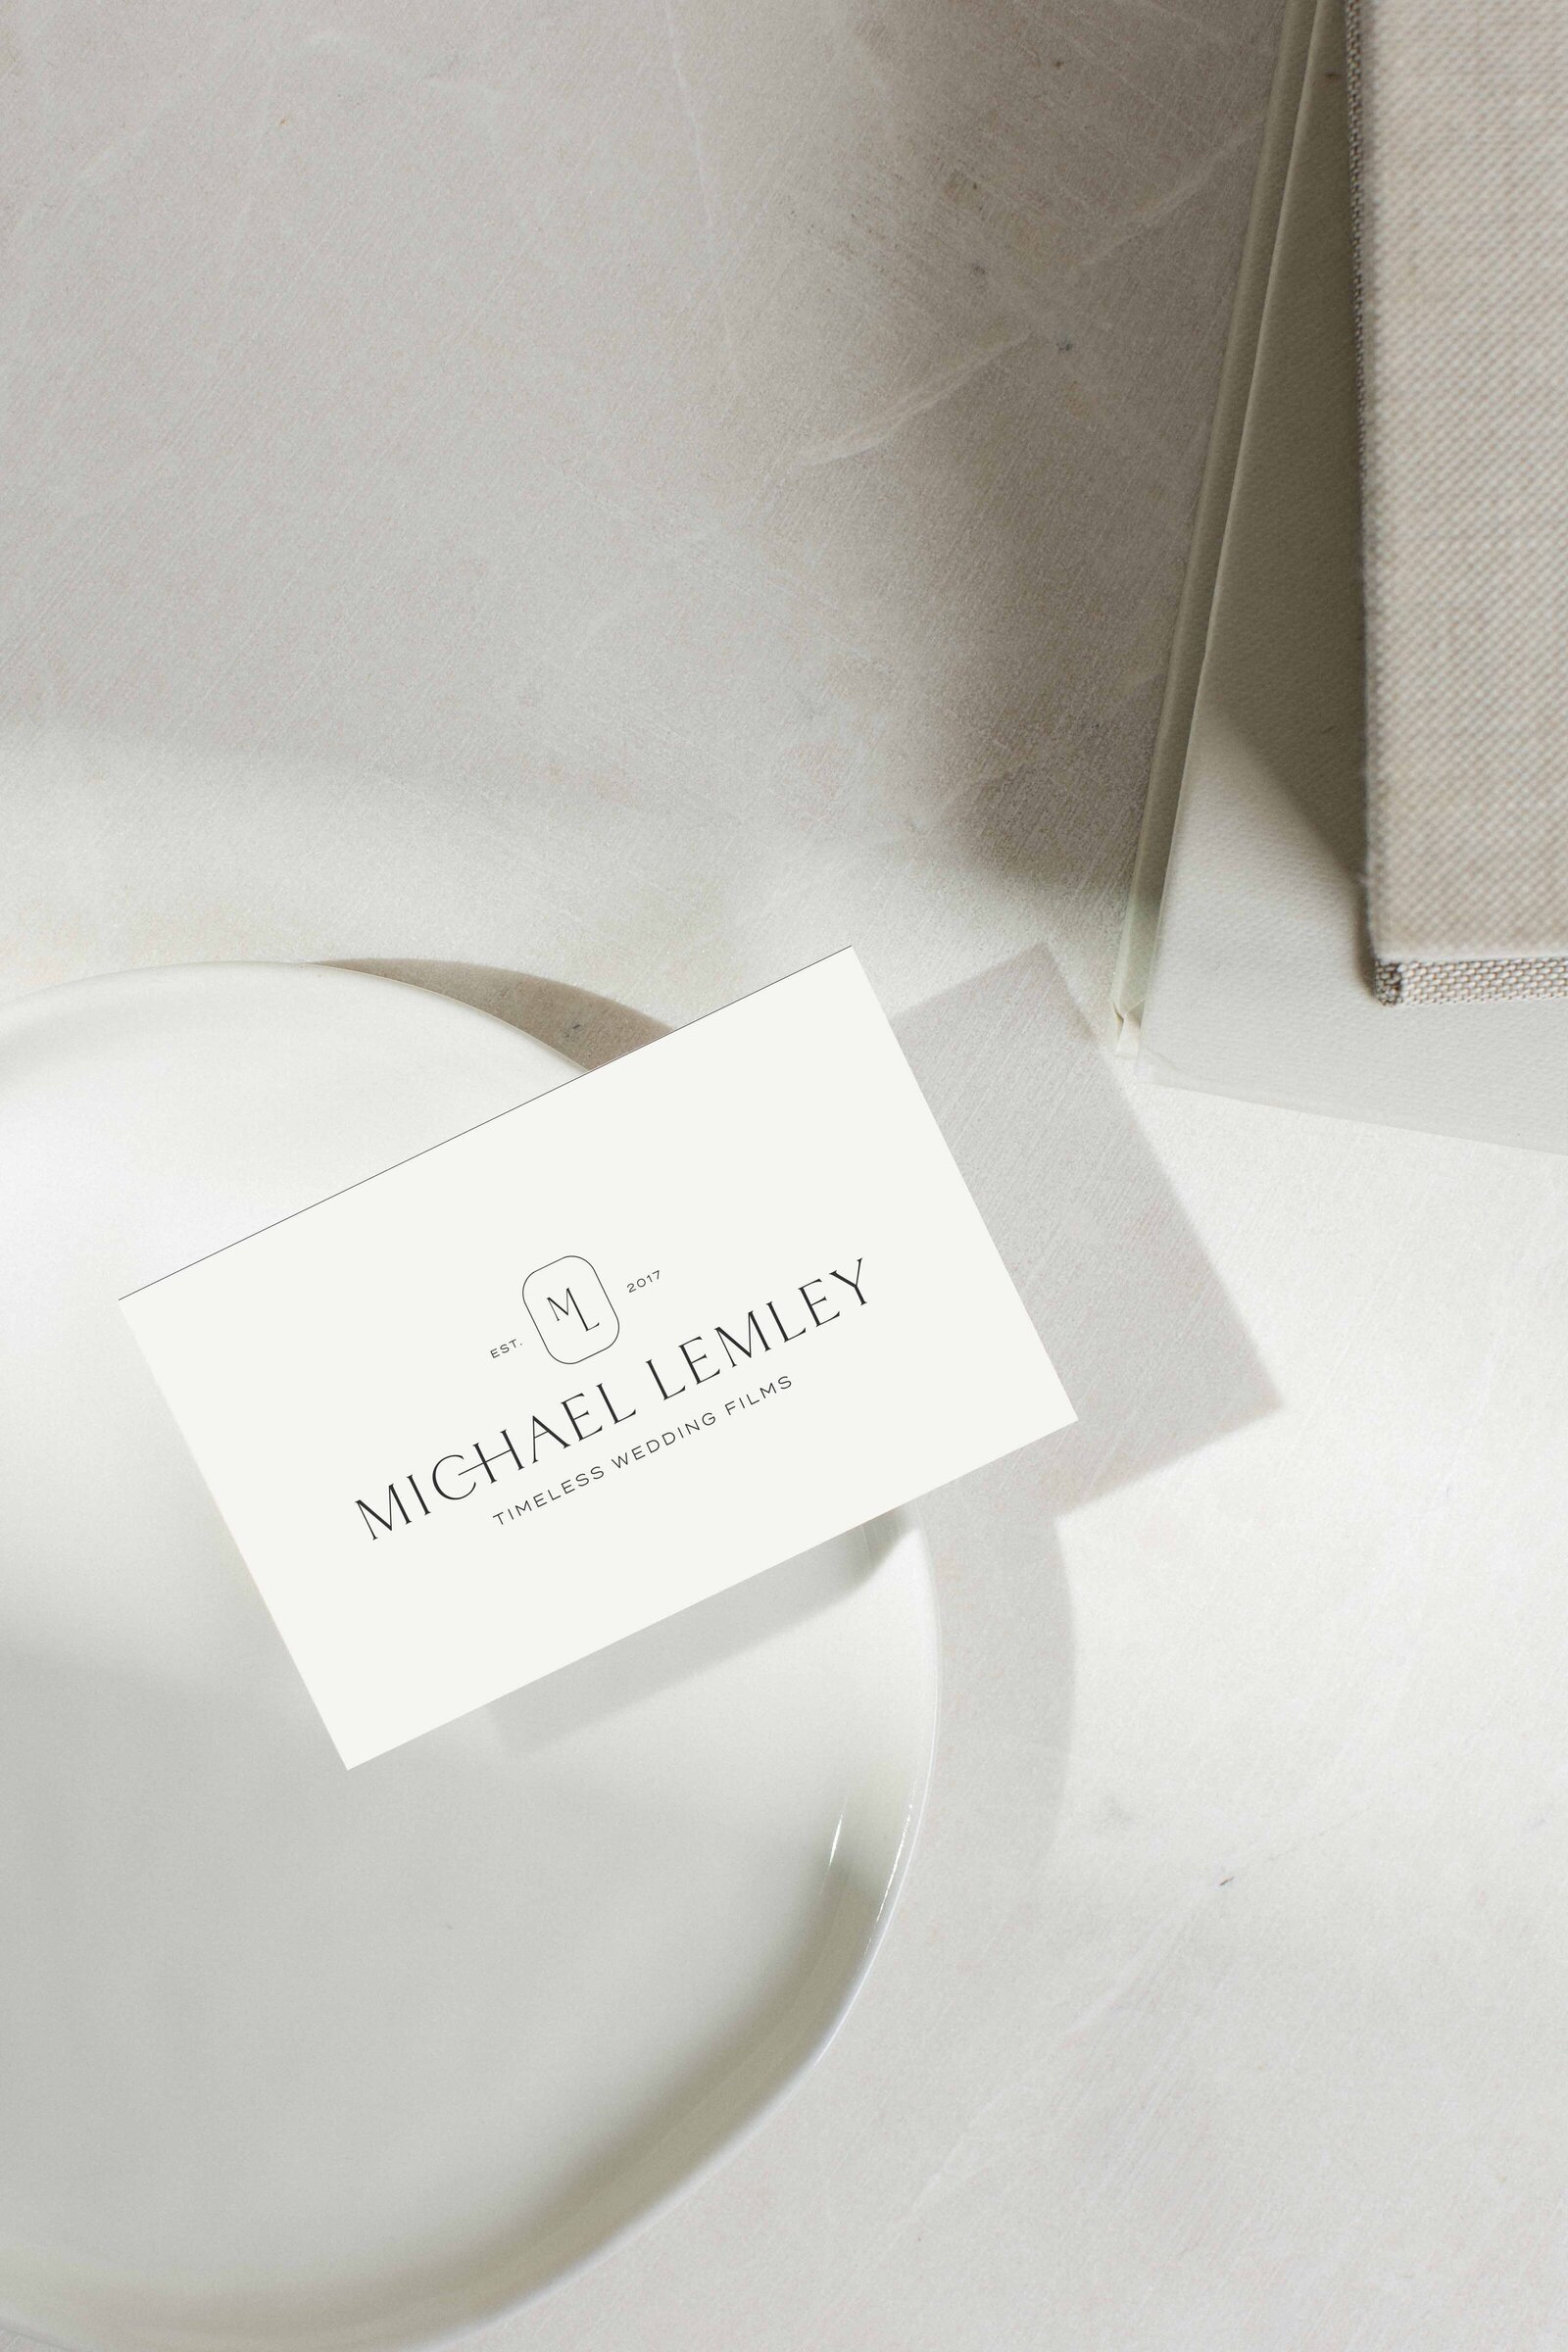 Michael Business card